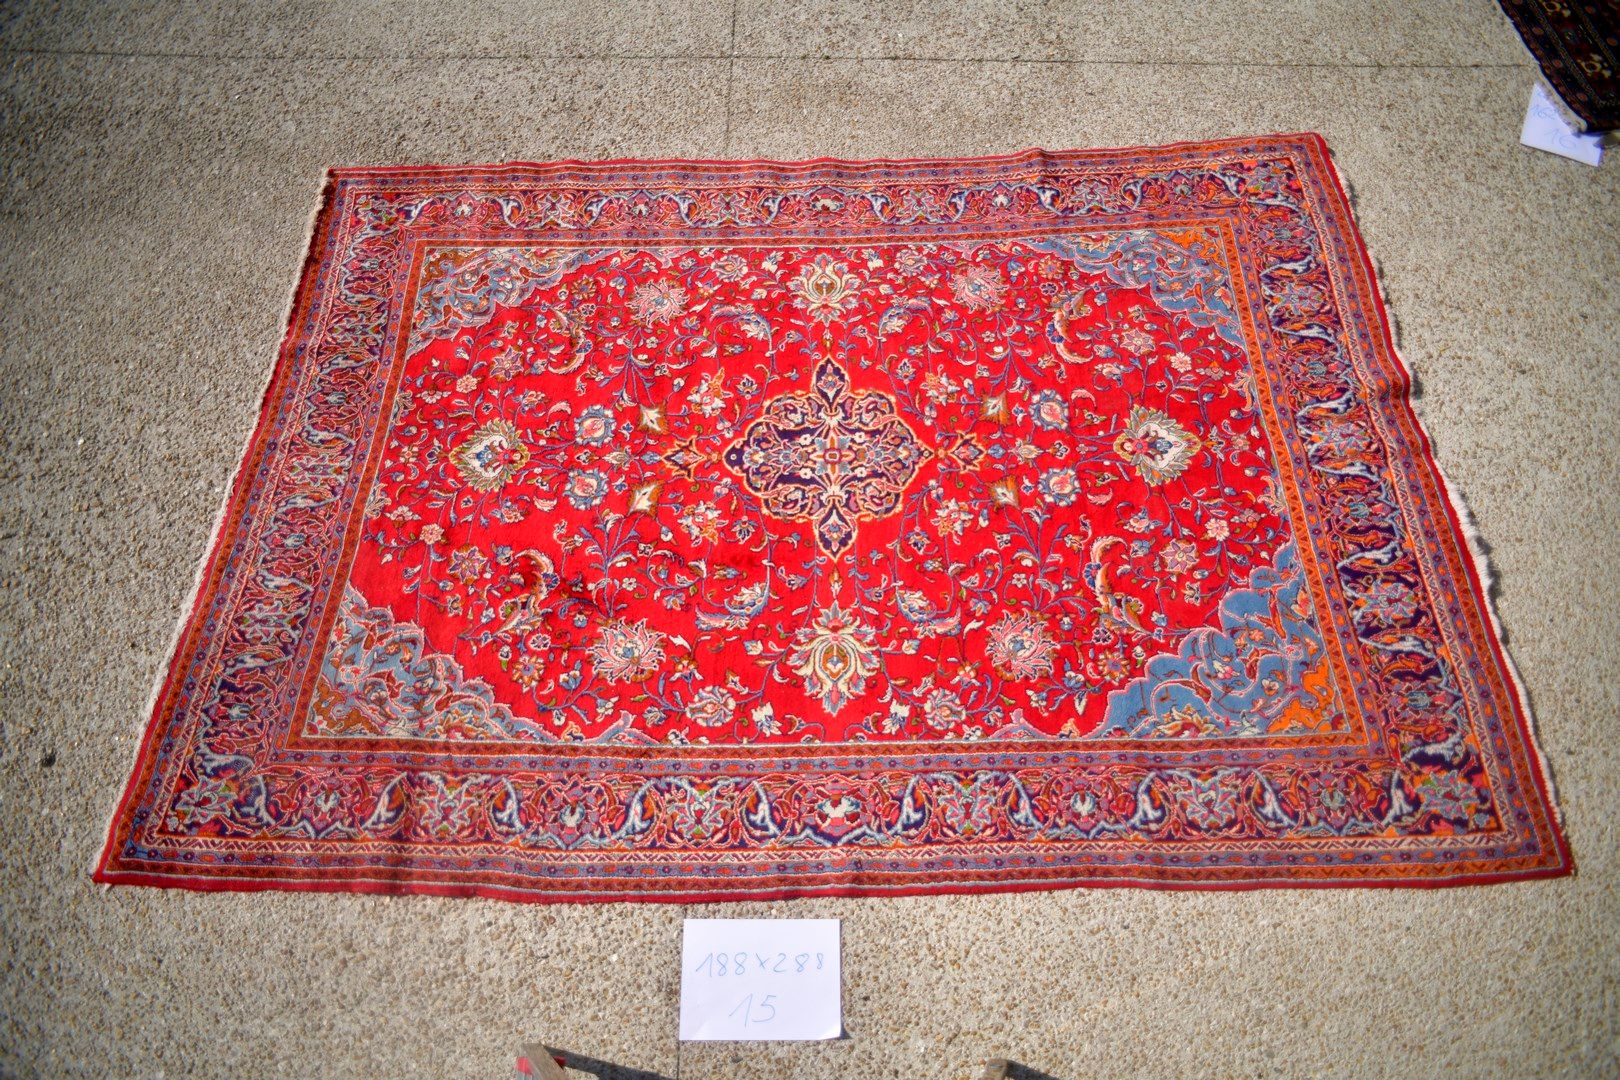 Null 萨鲁克（伊朗），1980年。

羊毛天鹅绒，棉质基础。

红宝石领域，有花卉装饰。

状况良好。

288 x 188 cm